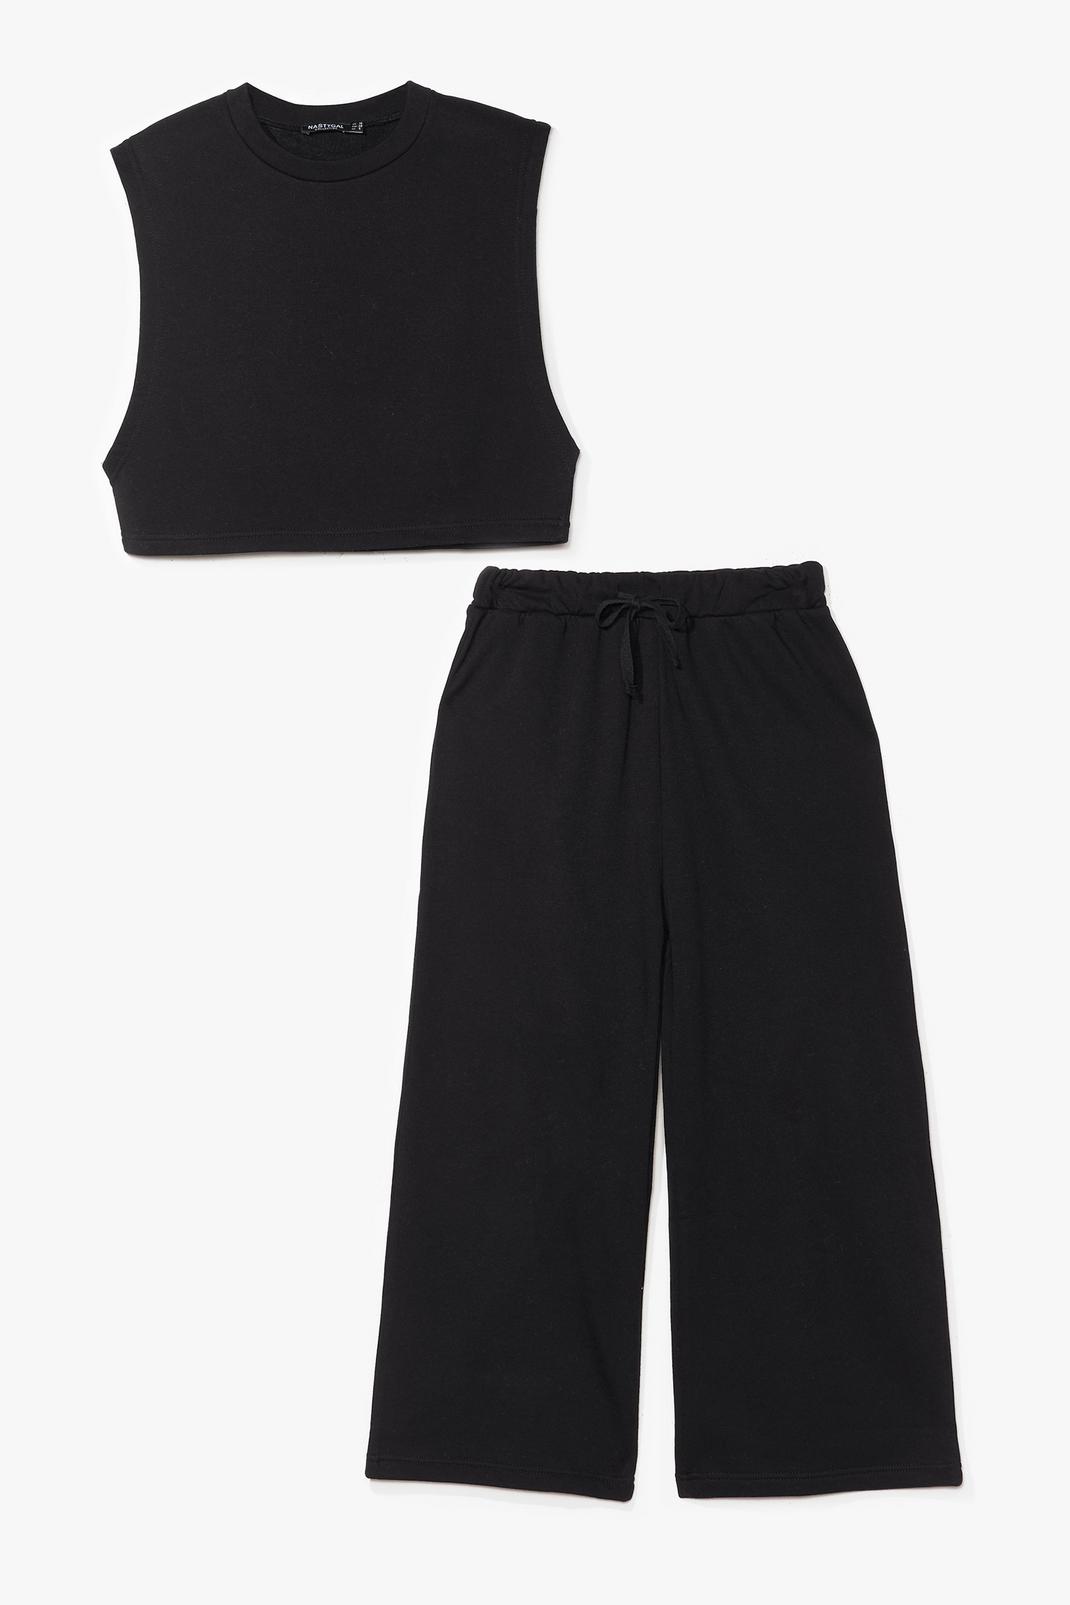 Black Cropped Tank Top and Pants Loungewear Set image number 1